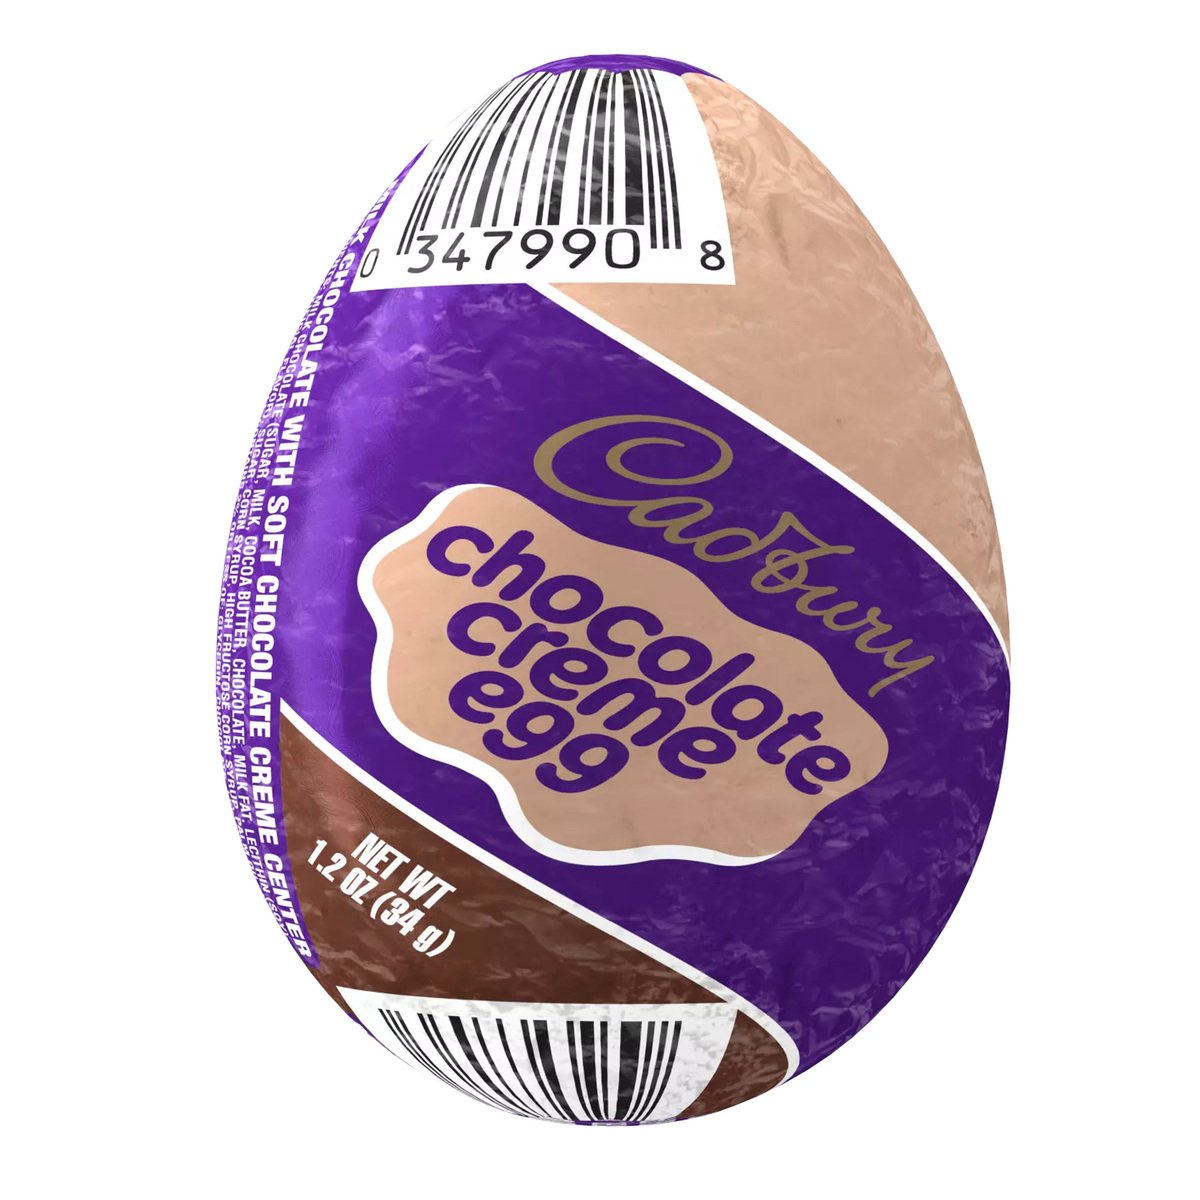 Cadbury Chocolate Creme Egg 34 g